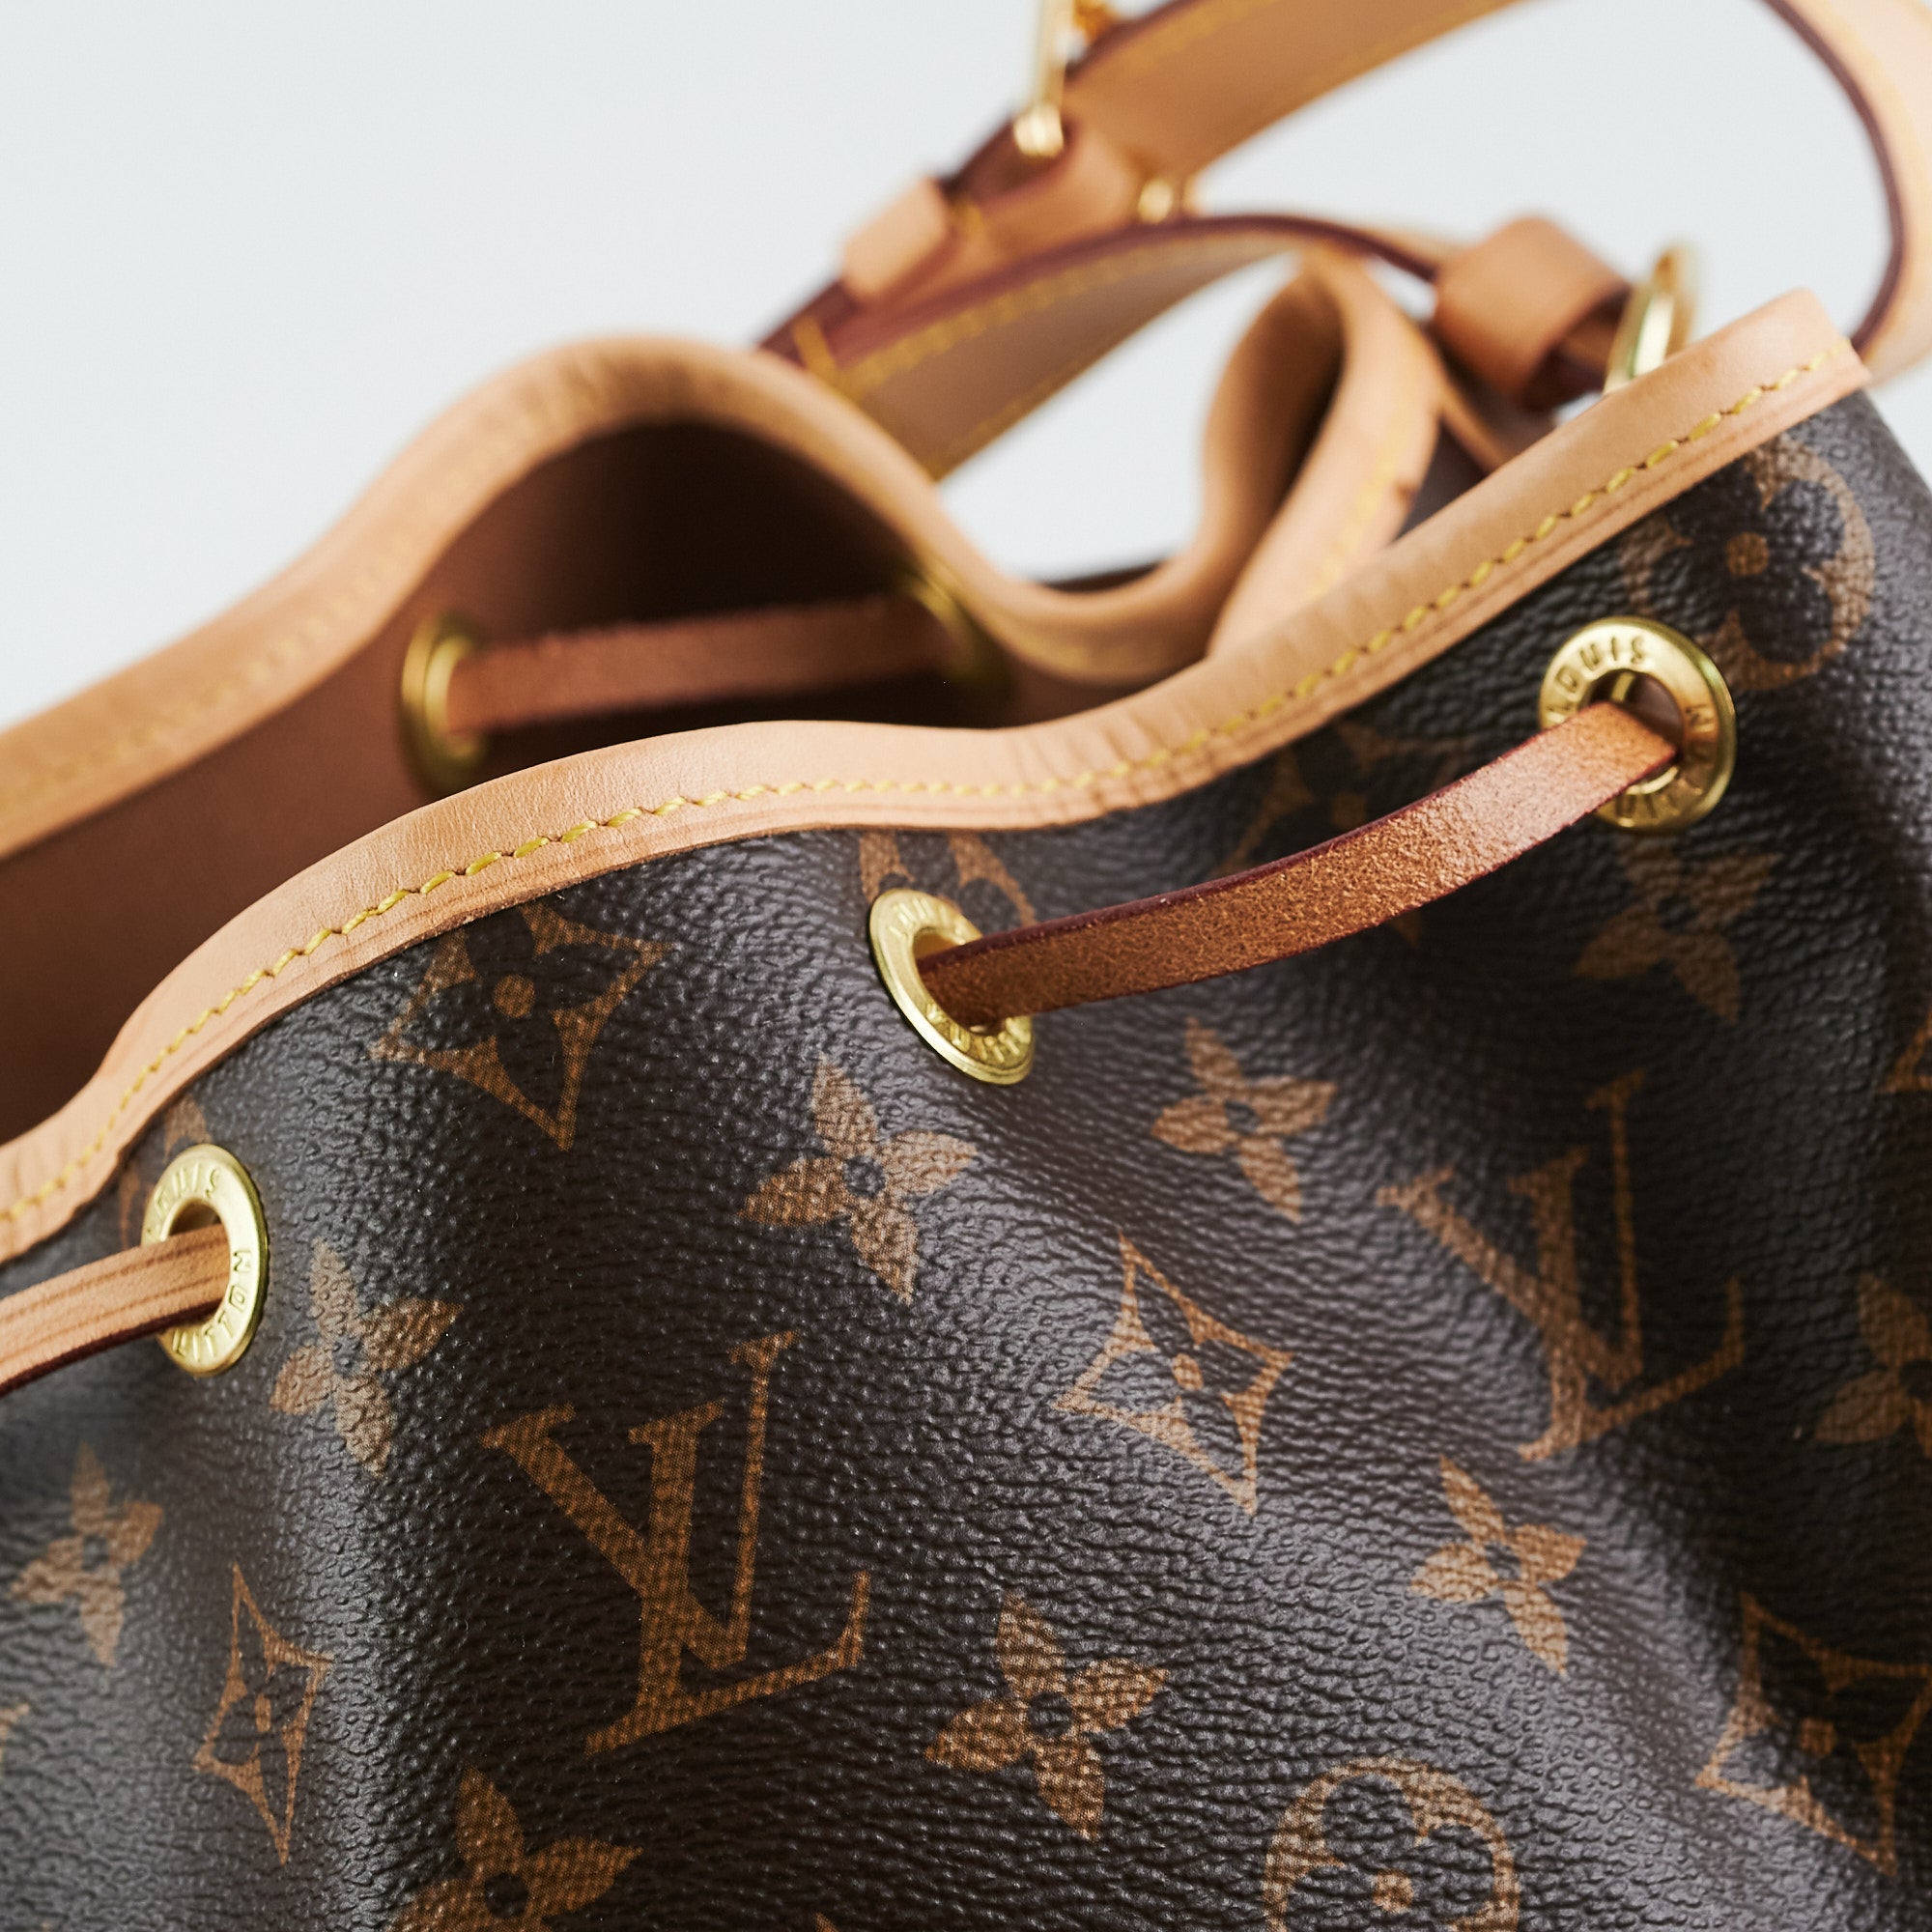 Louis Vuitton Noe Handbag Monogram Canvas Large Brown